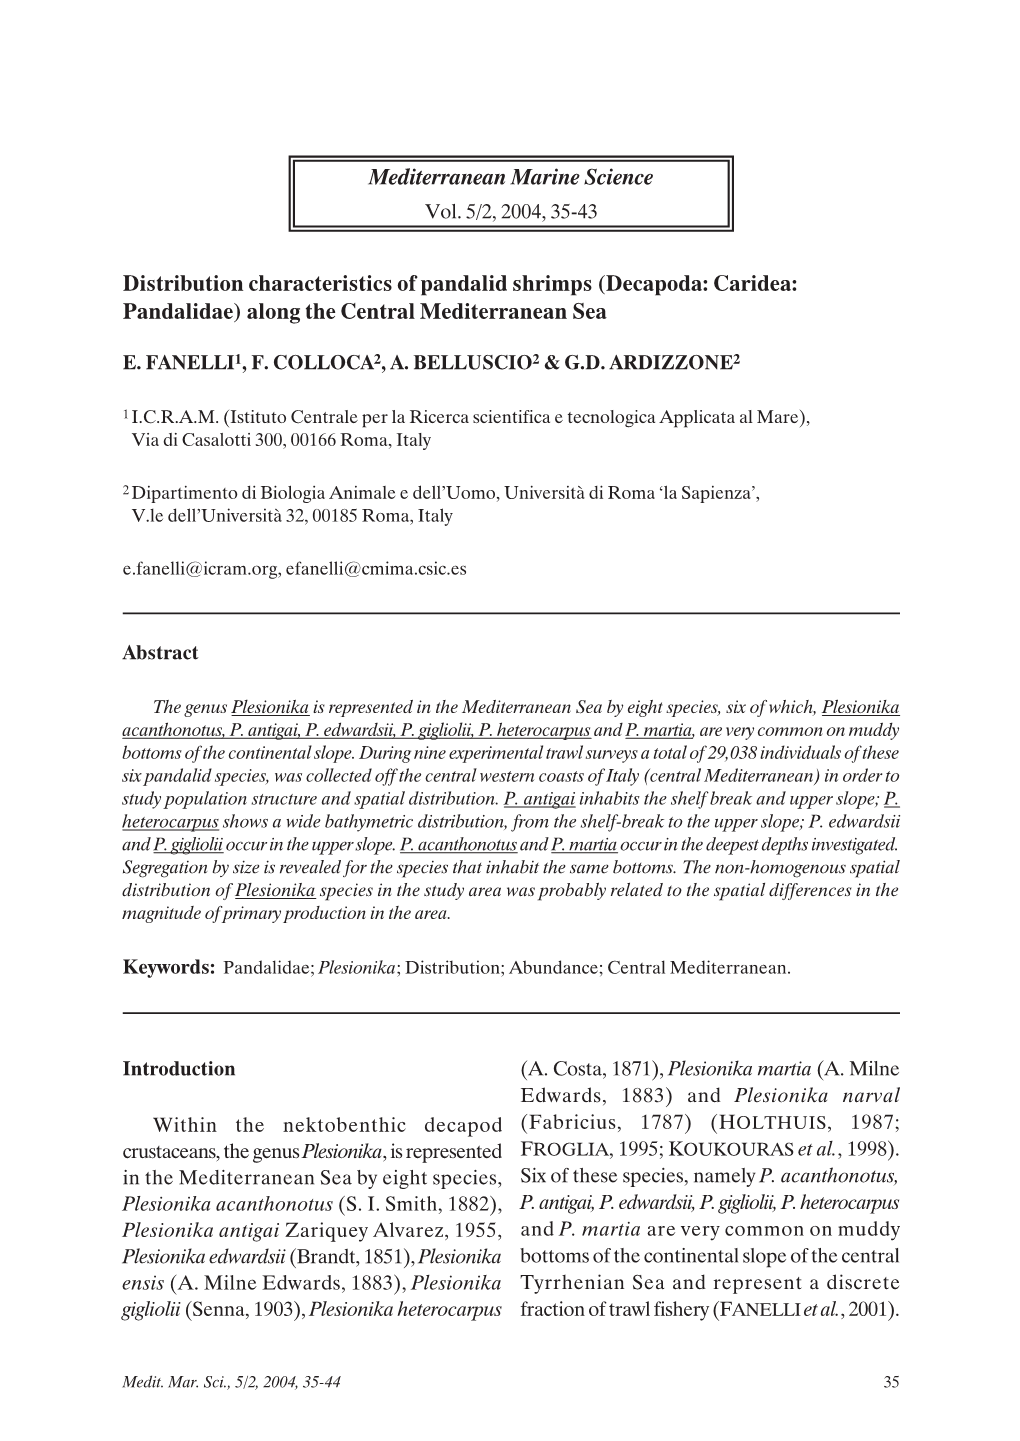 Distribution Characteristics of Pandalid Shrimps (Decapoda: Caridea: Pandalidae) Along the Central Mediterranean Sea